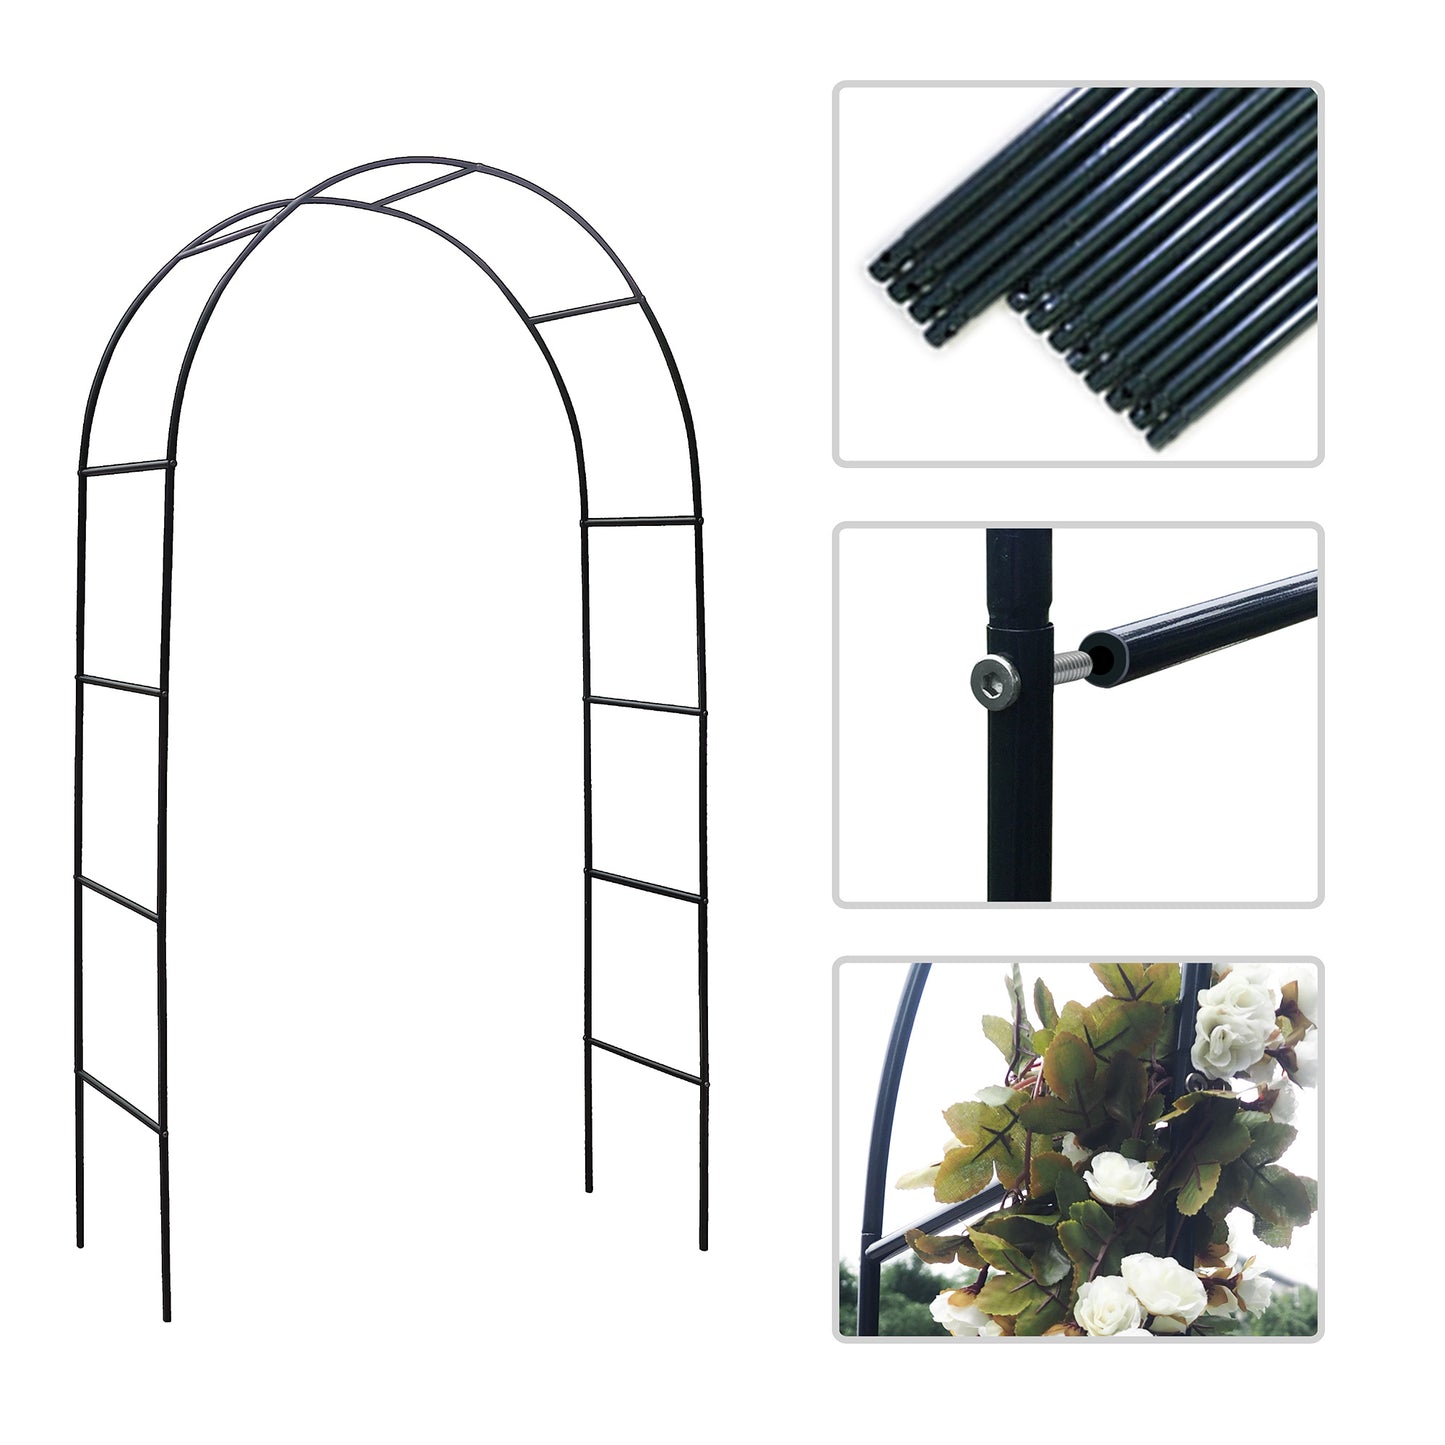 78"H x 45"W Metal Garden Arch Trellis; Adjustable Arbor Trellis for Garden Climbing Plants Support or Wedding Decor